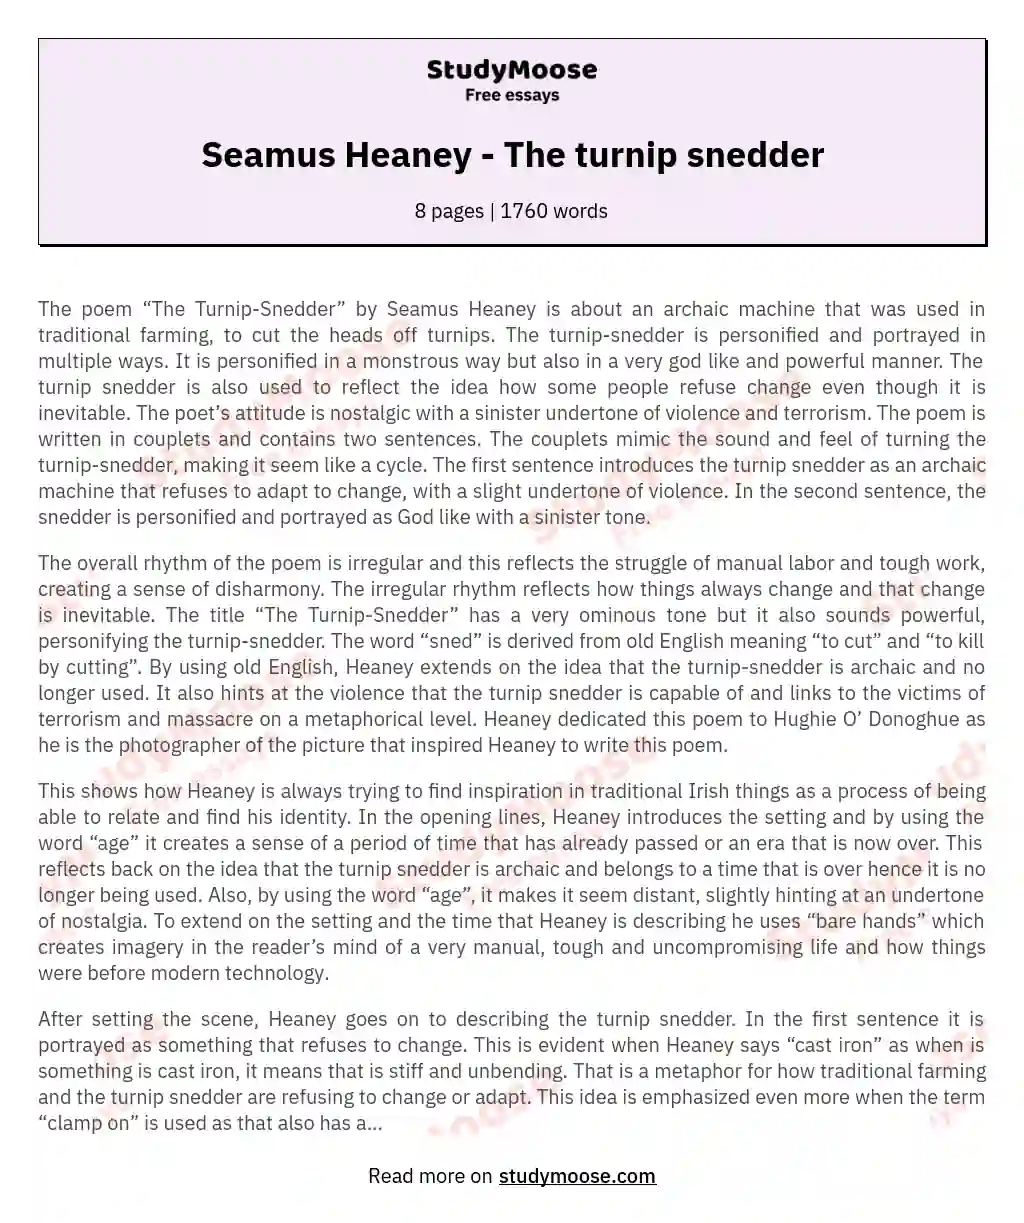 Seamus Heaney - The turnip snedder